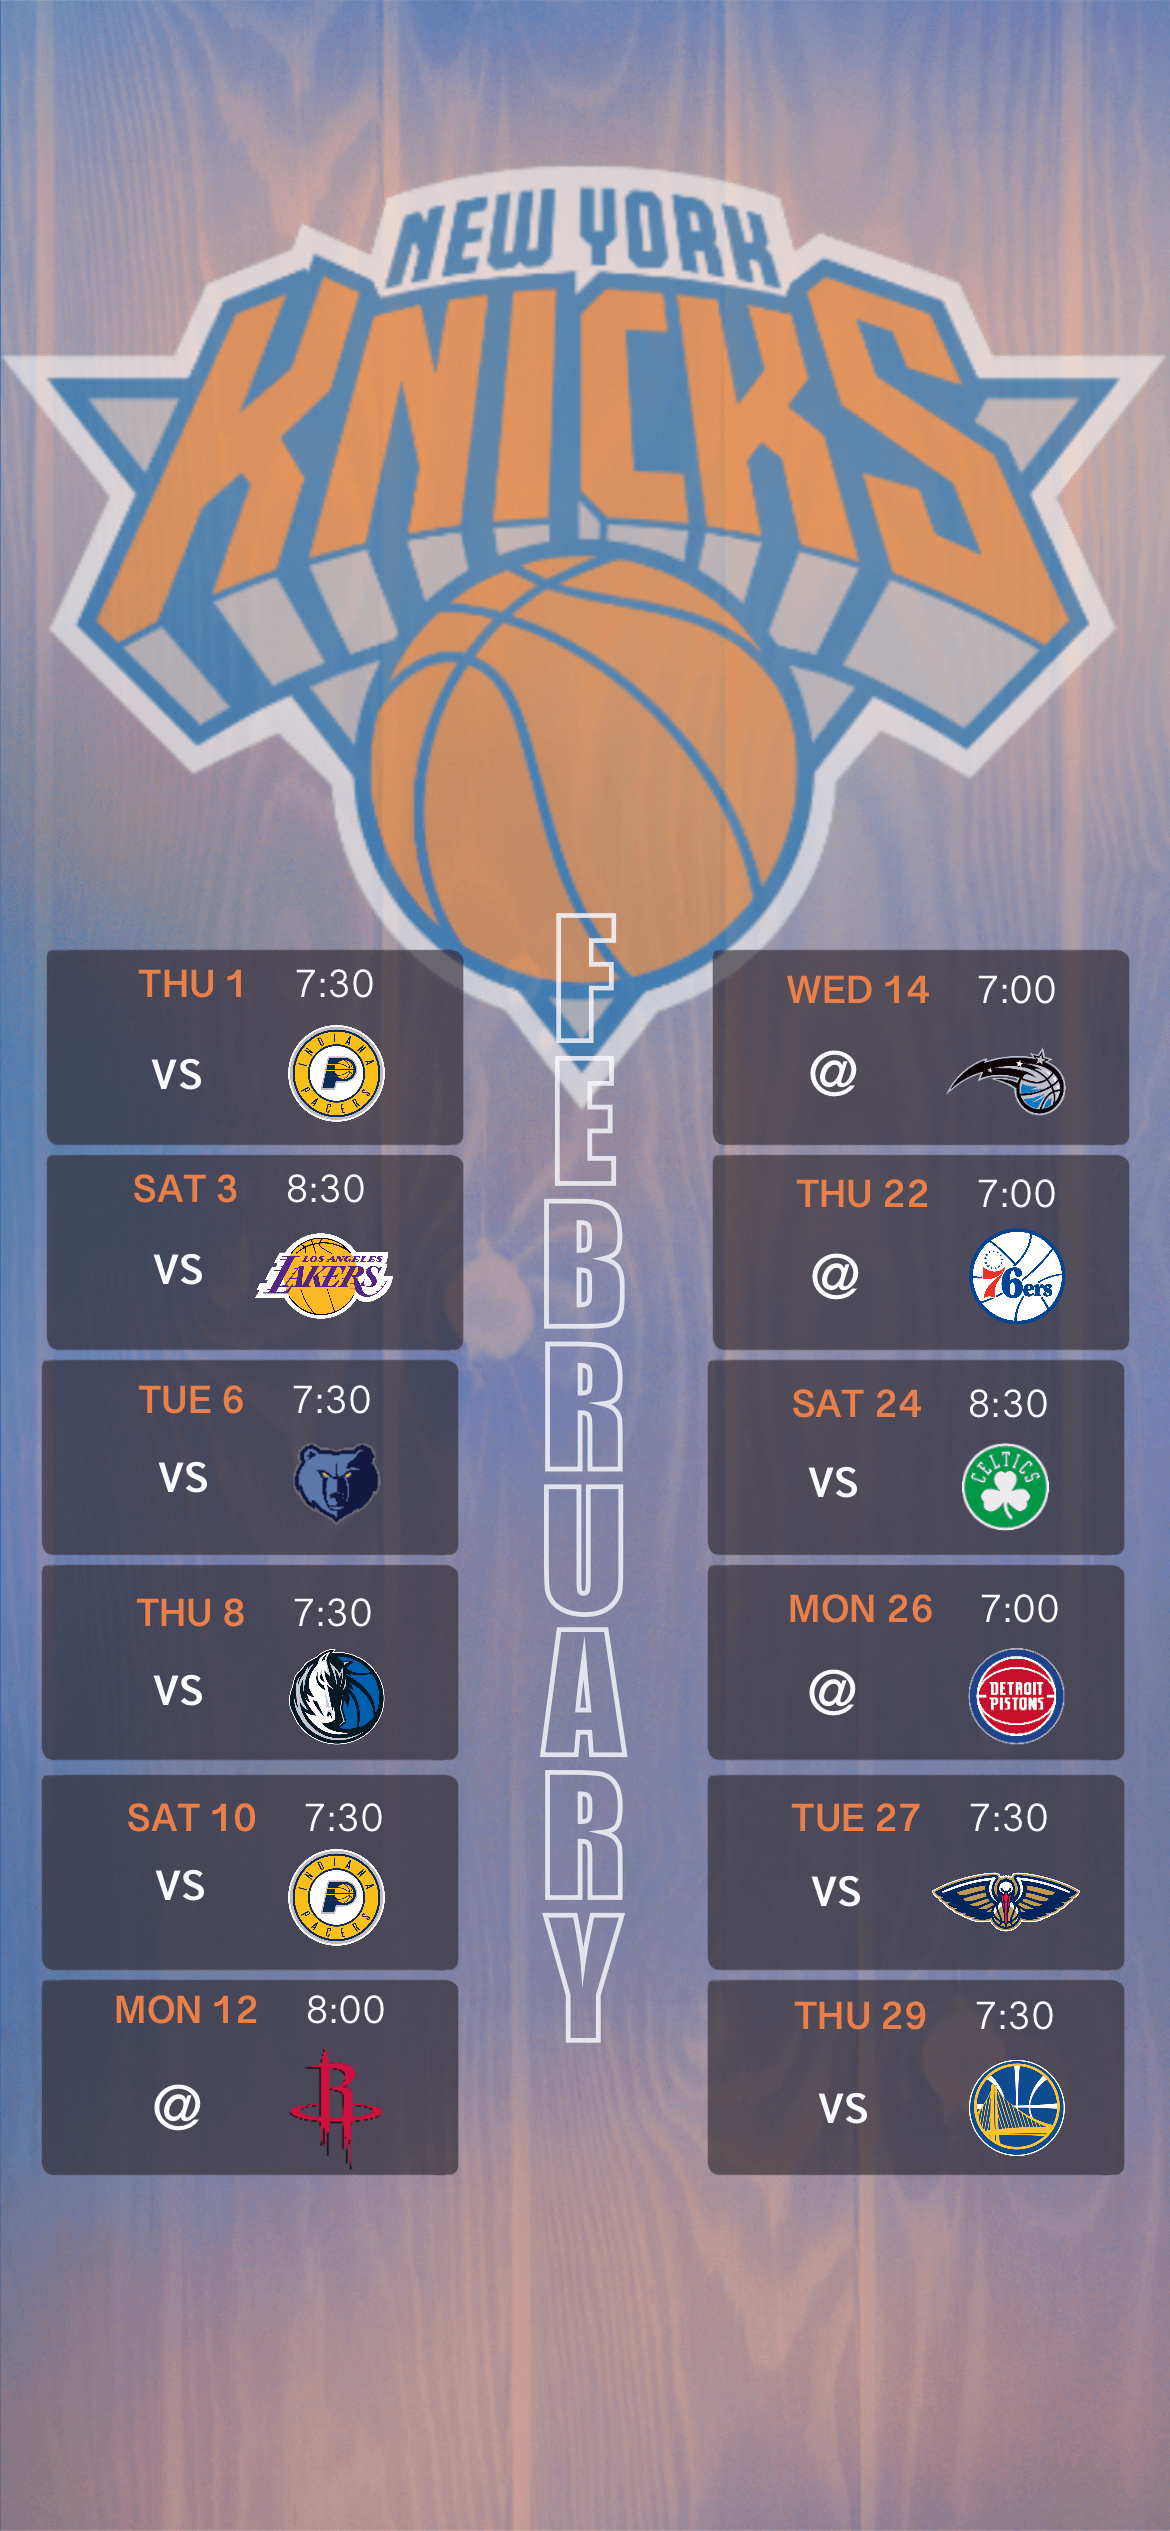 Knicks Season Schedule Wallpaper For iPhone R Nyknicks